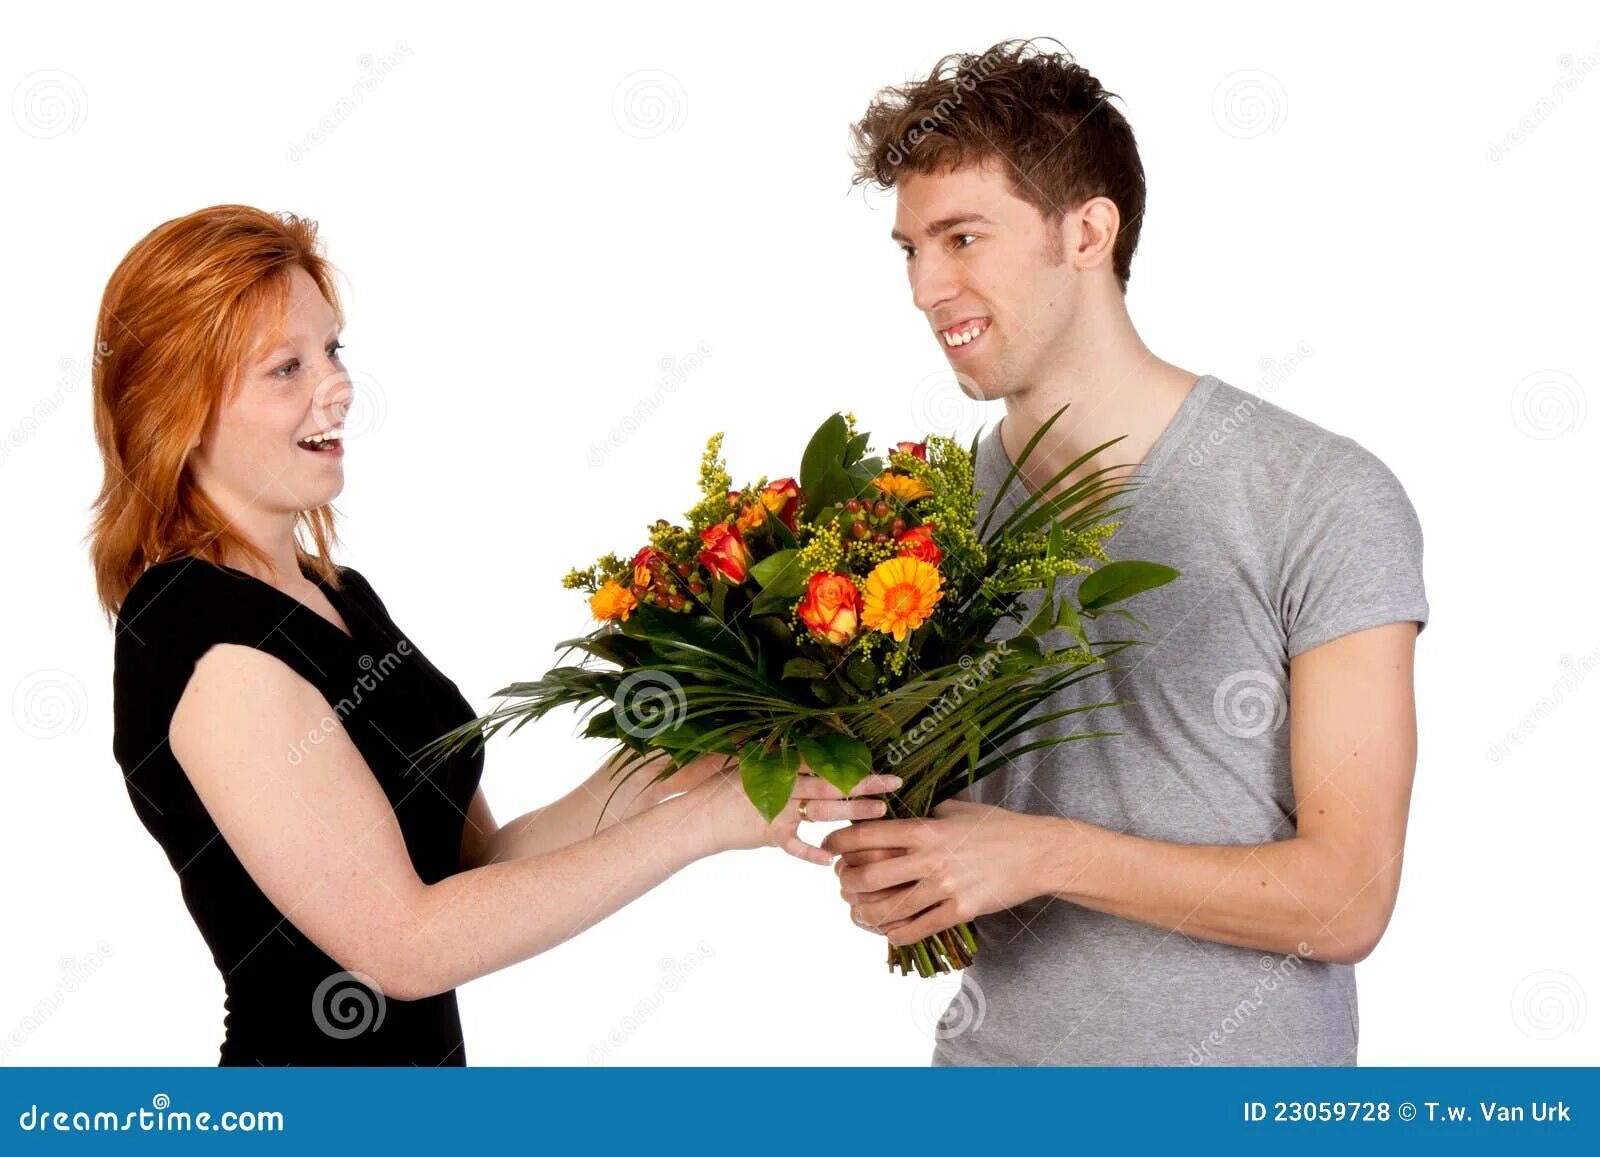 Мужчина дарит цветы женщине. Мужчина дарит букет цветов. Парень дарит девушке цветы. Парень дарит цветы маме. Сонник мужчина дарит